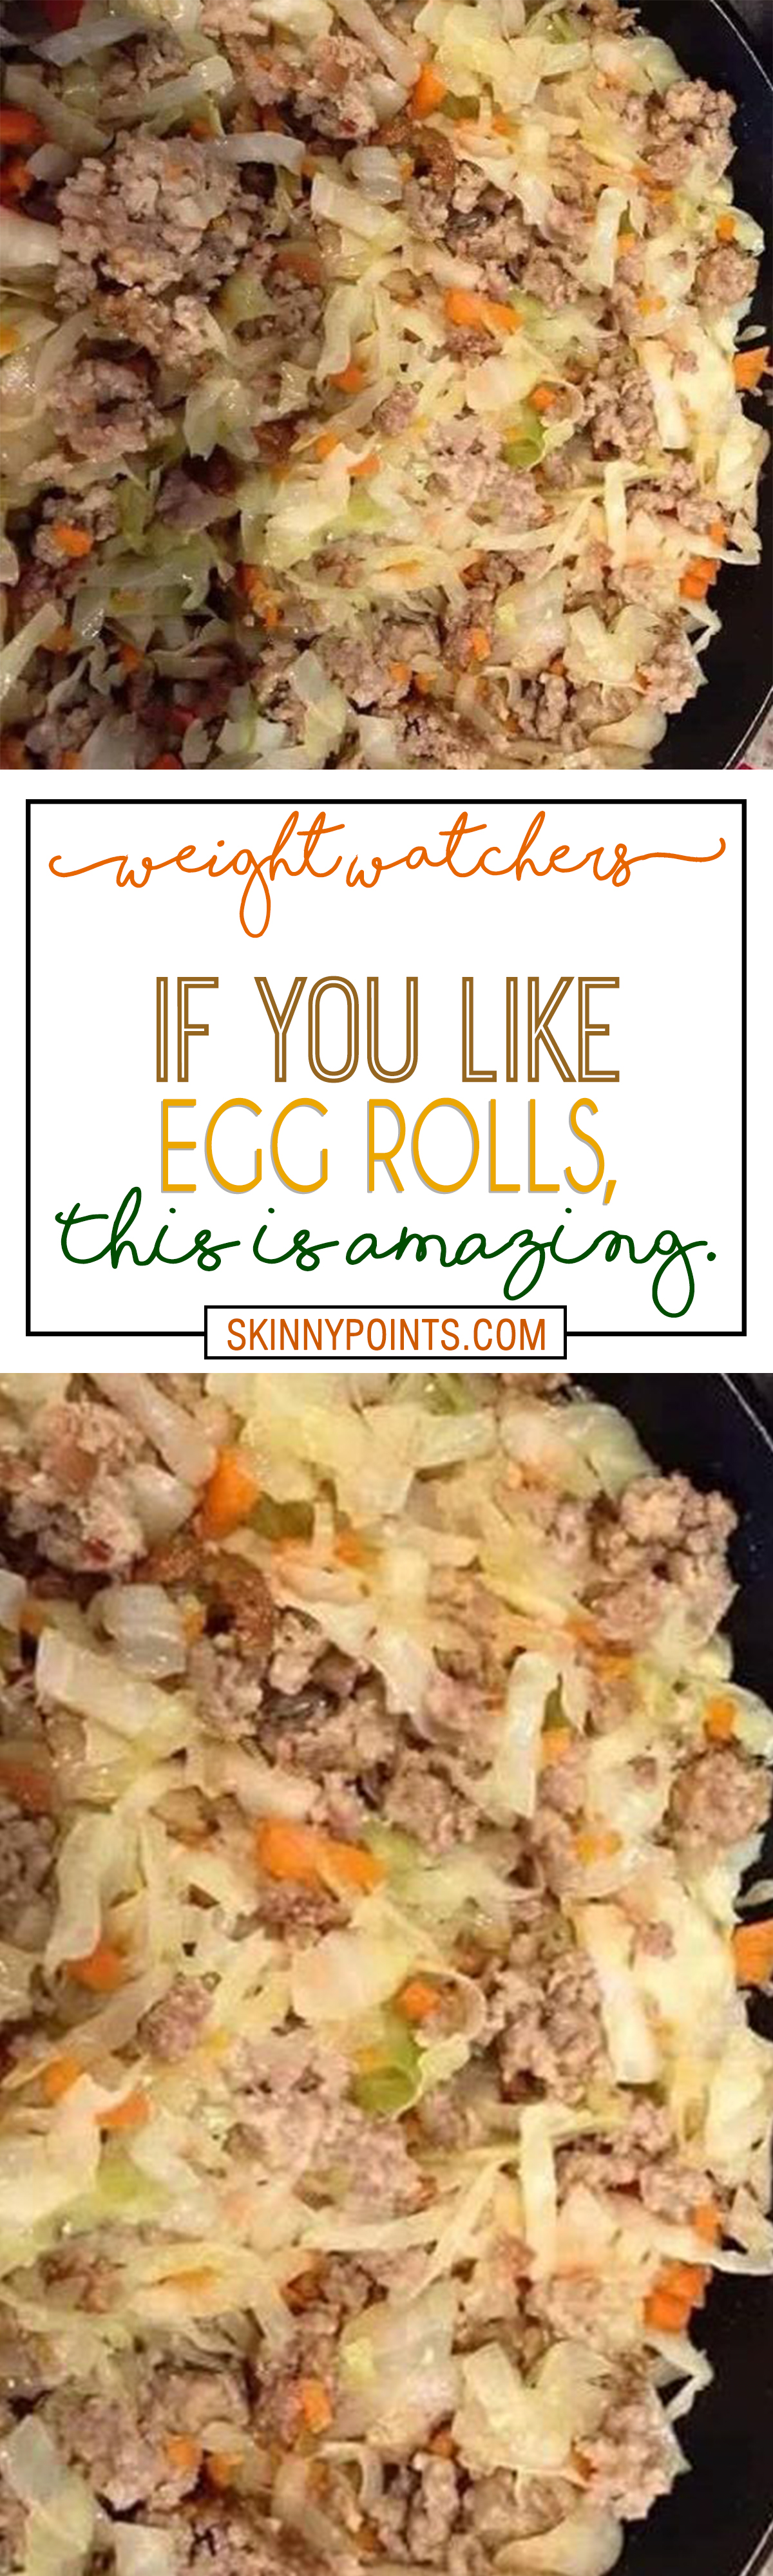 Egg rolls Recipe